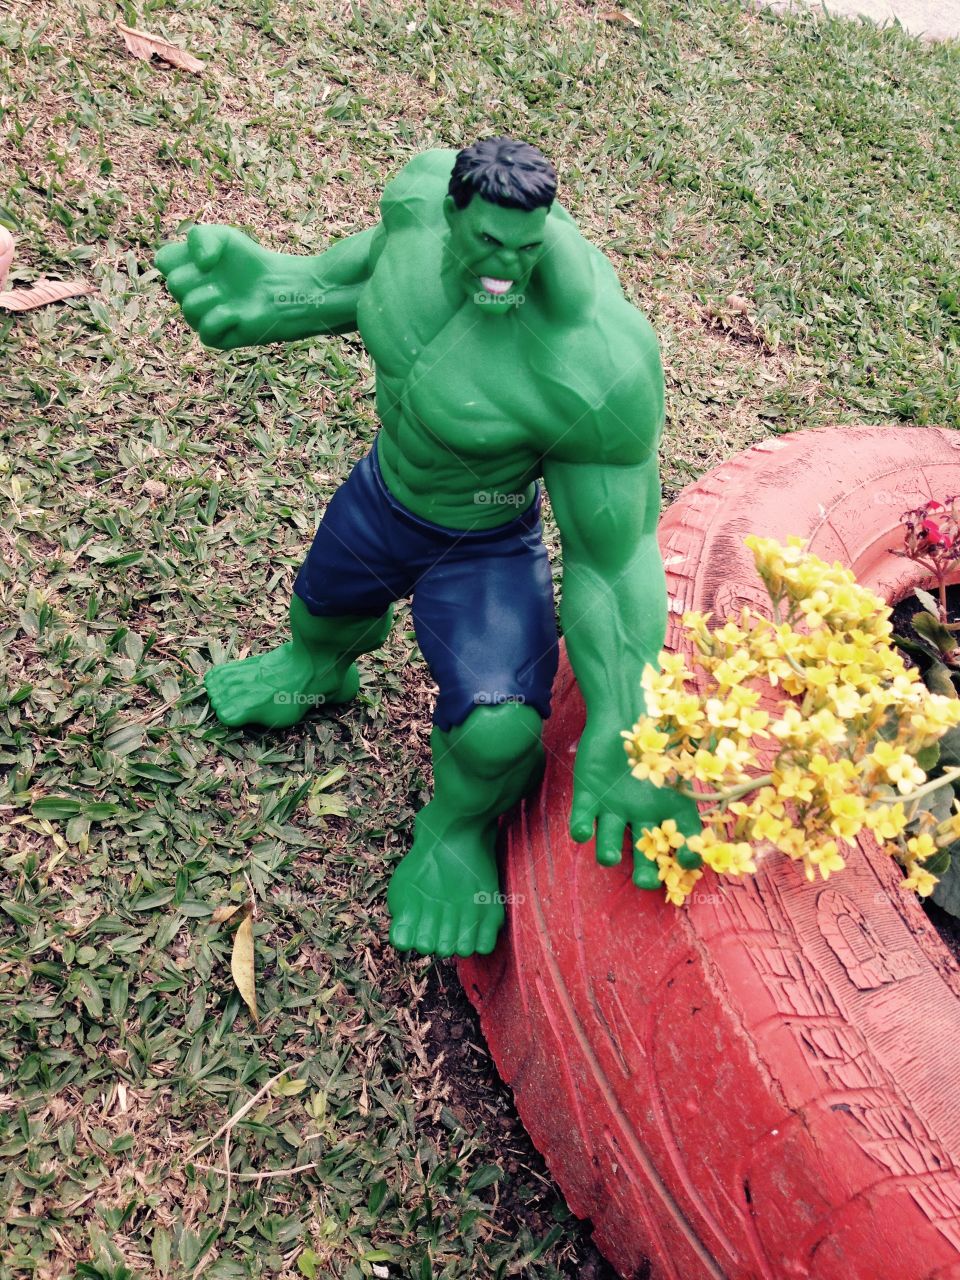 Hulk and flowers